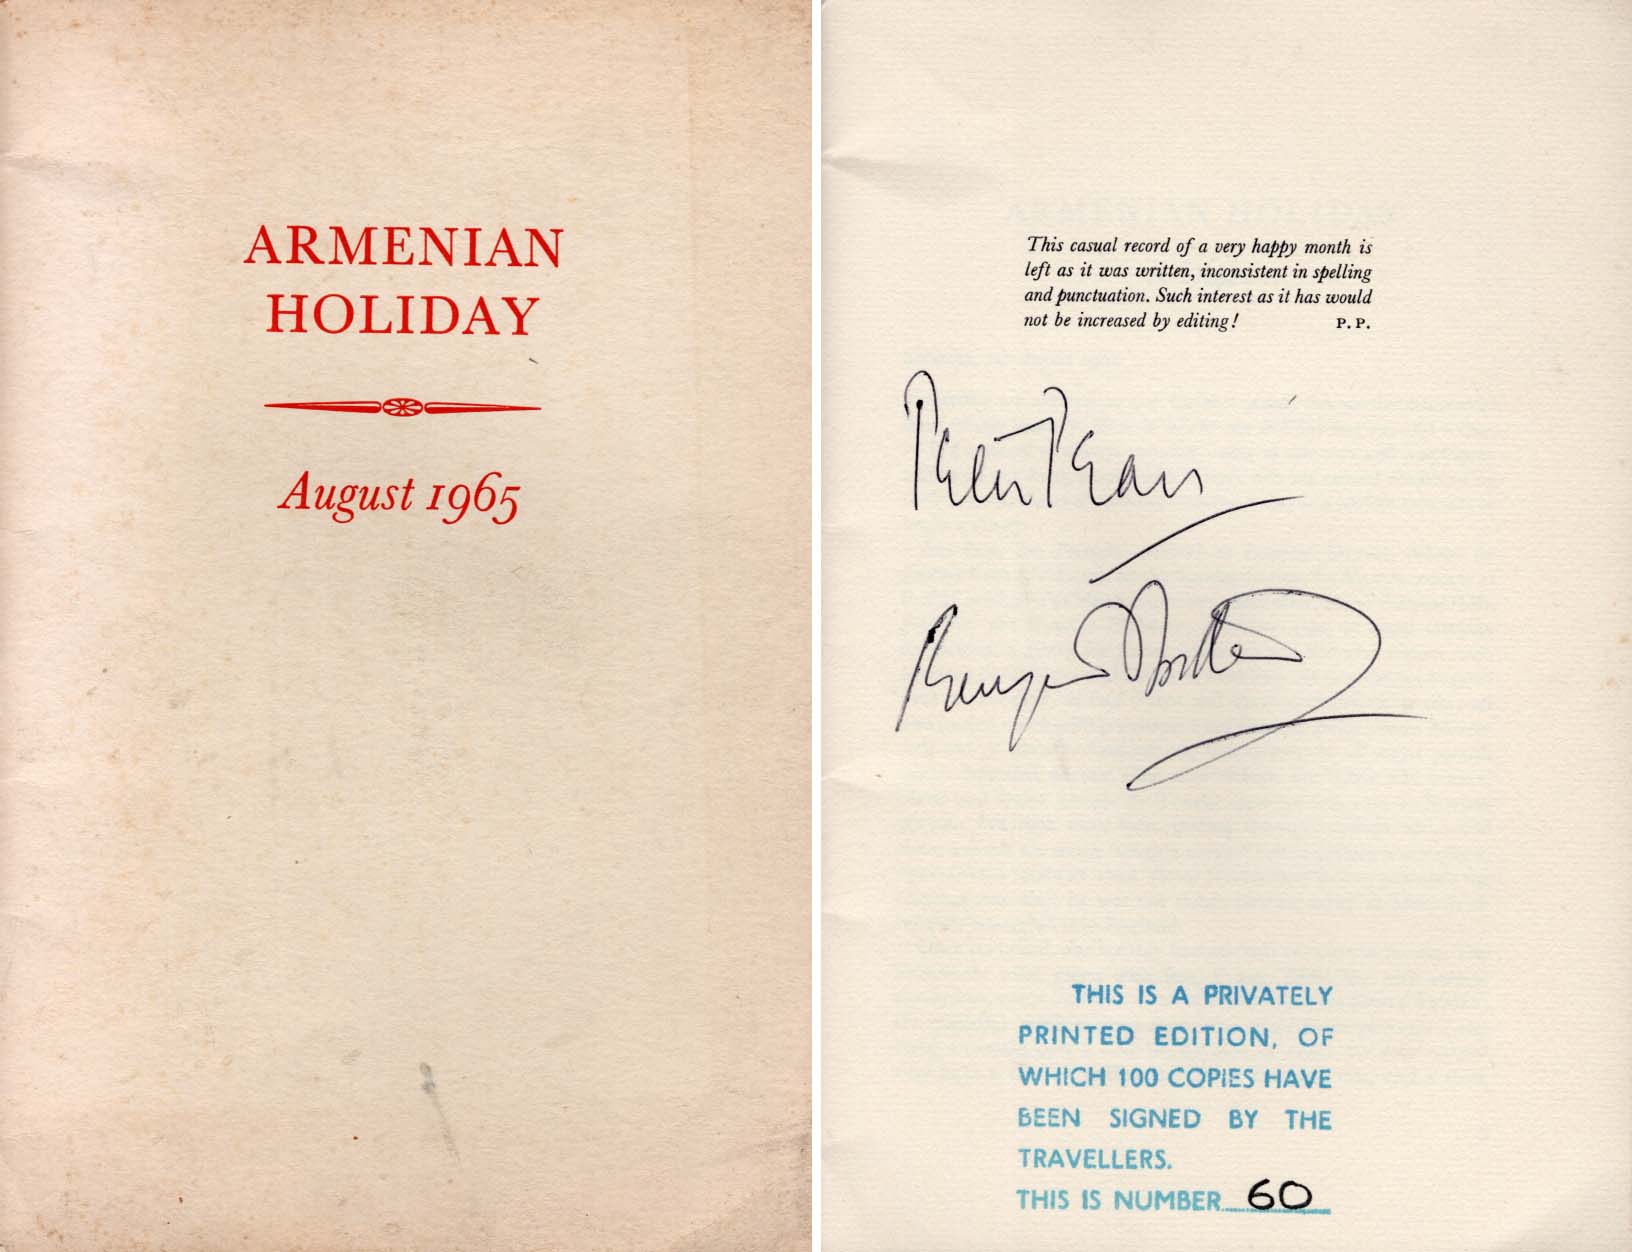 Benjamin &amp; Peter Britten &amp; Pears Autograph Autogramm | ID 8244924219541